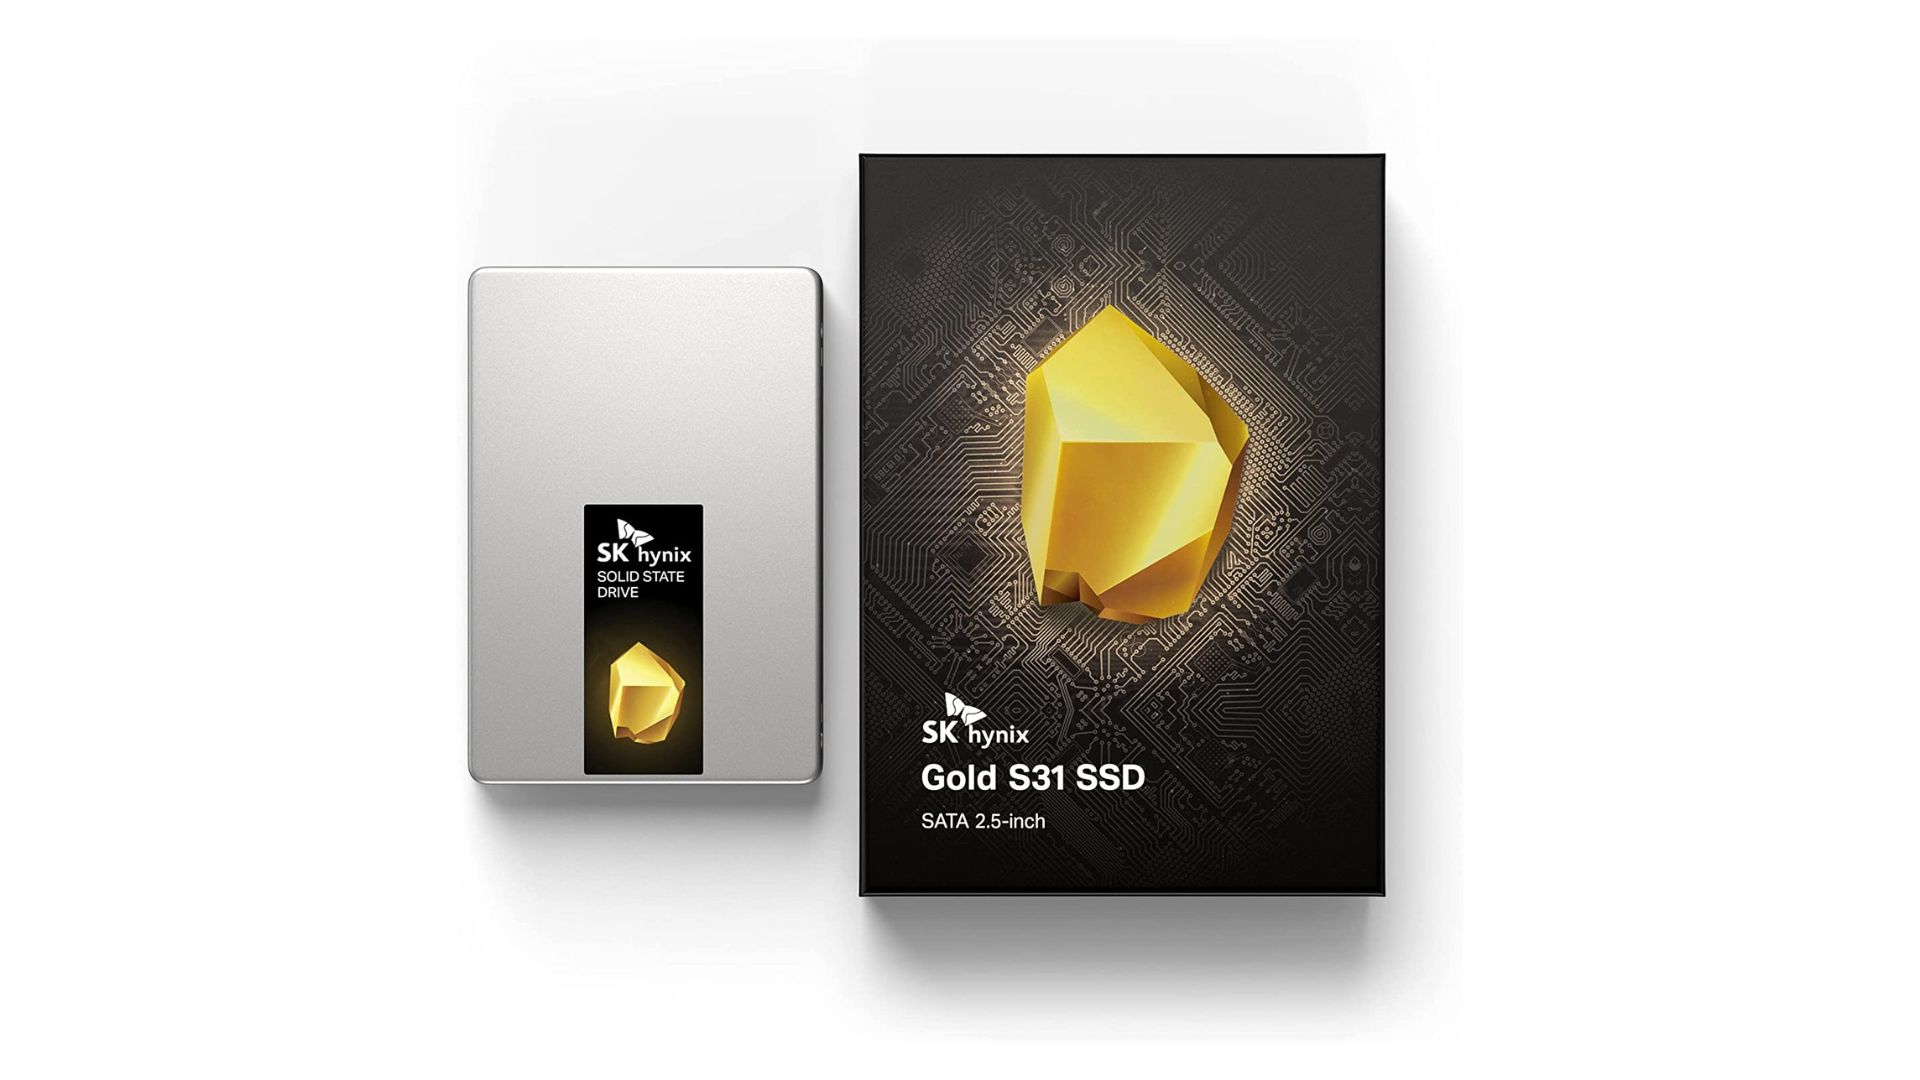 SK hynix Gold S31 1TB